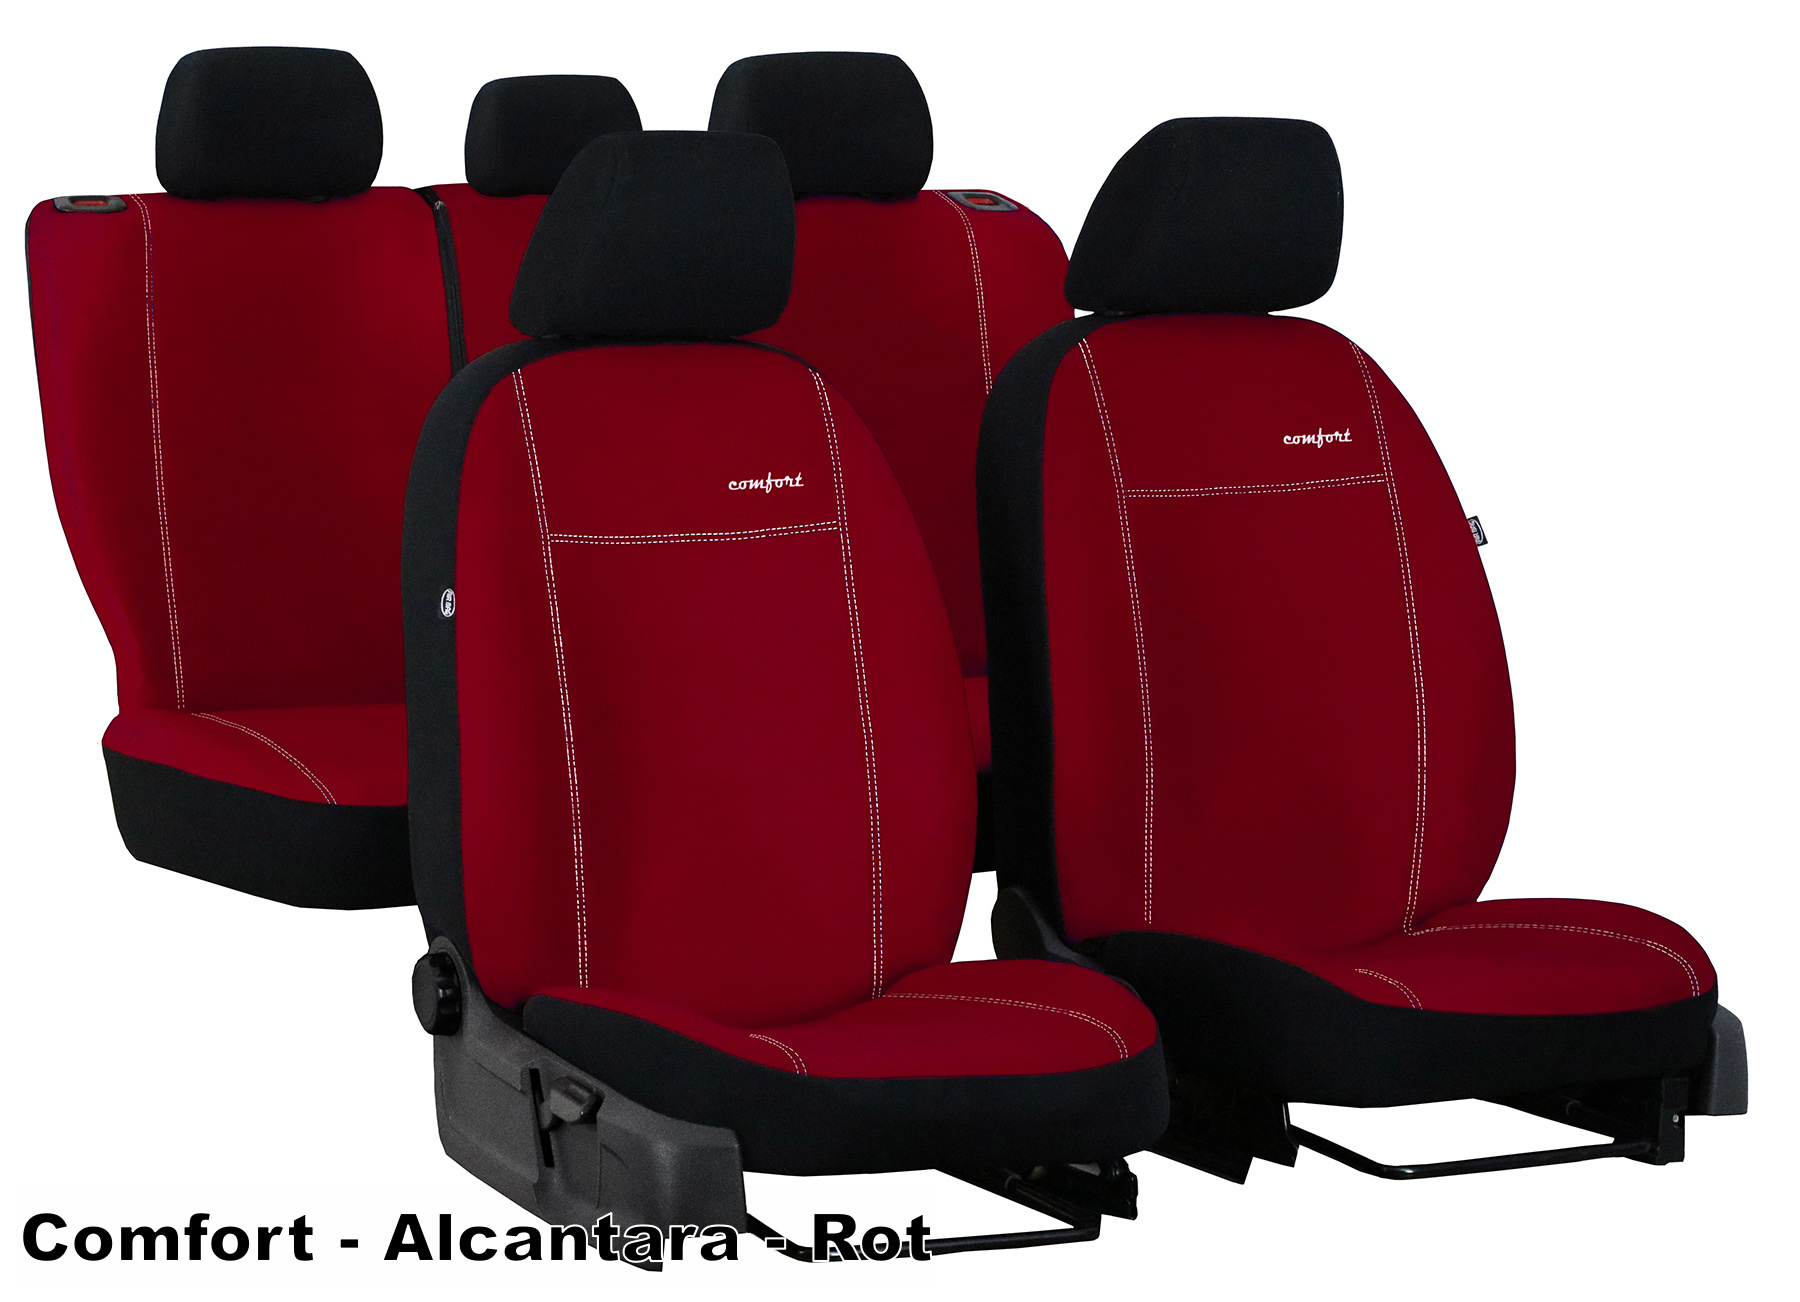 Renault Trafic 2 Kunstleder Sitzbezüge Sitzschoner Set, 59,90 €